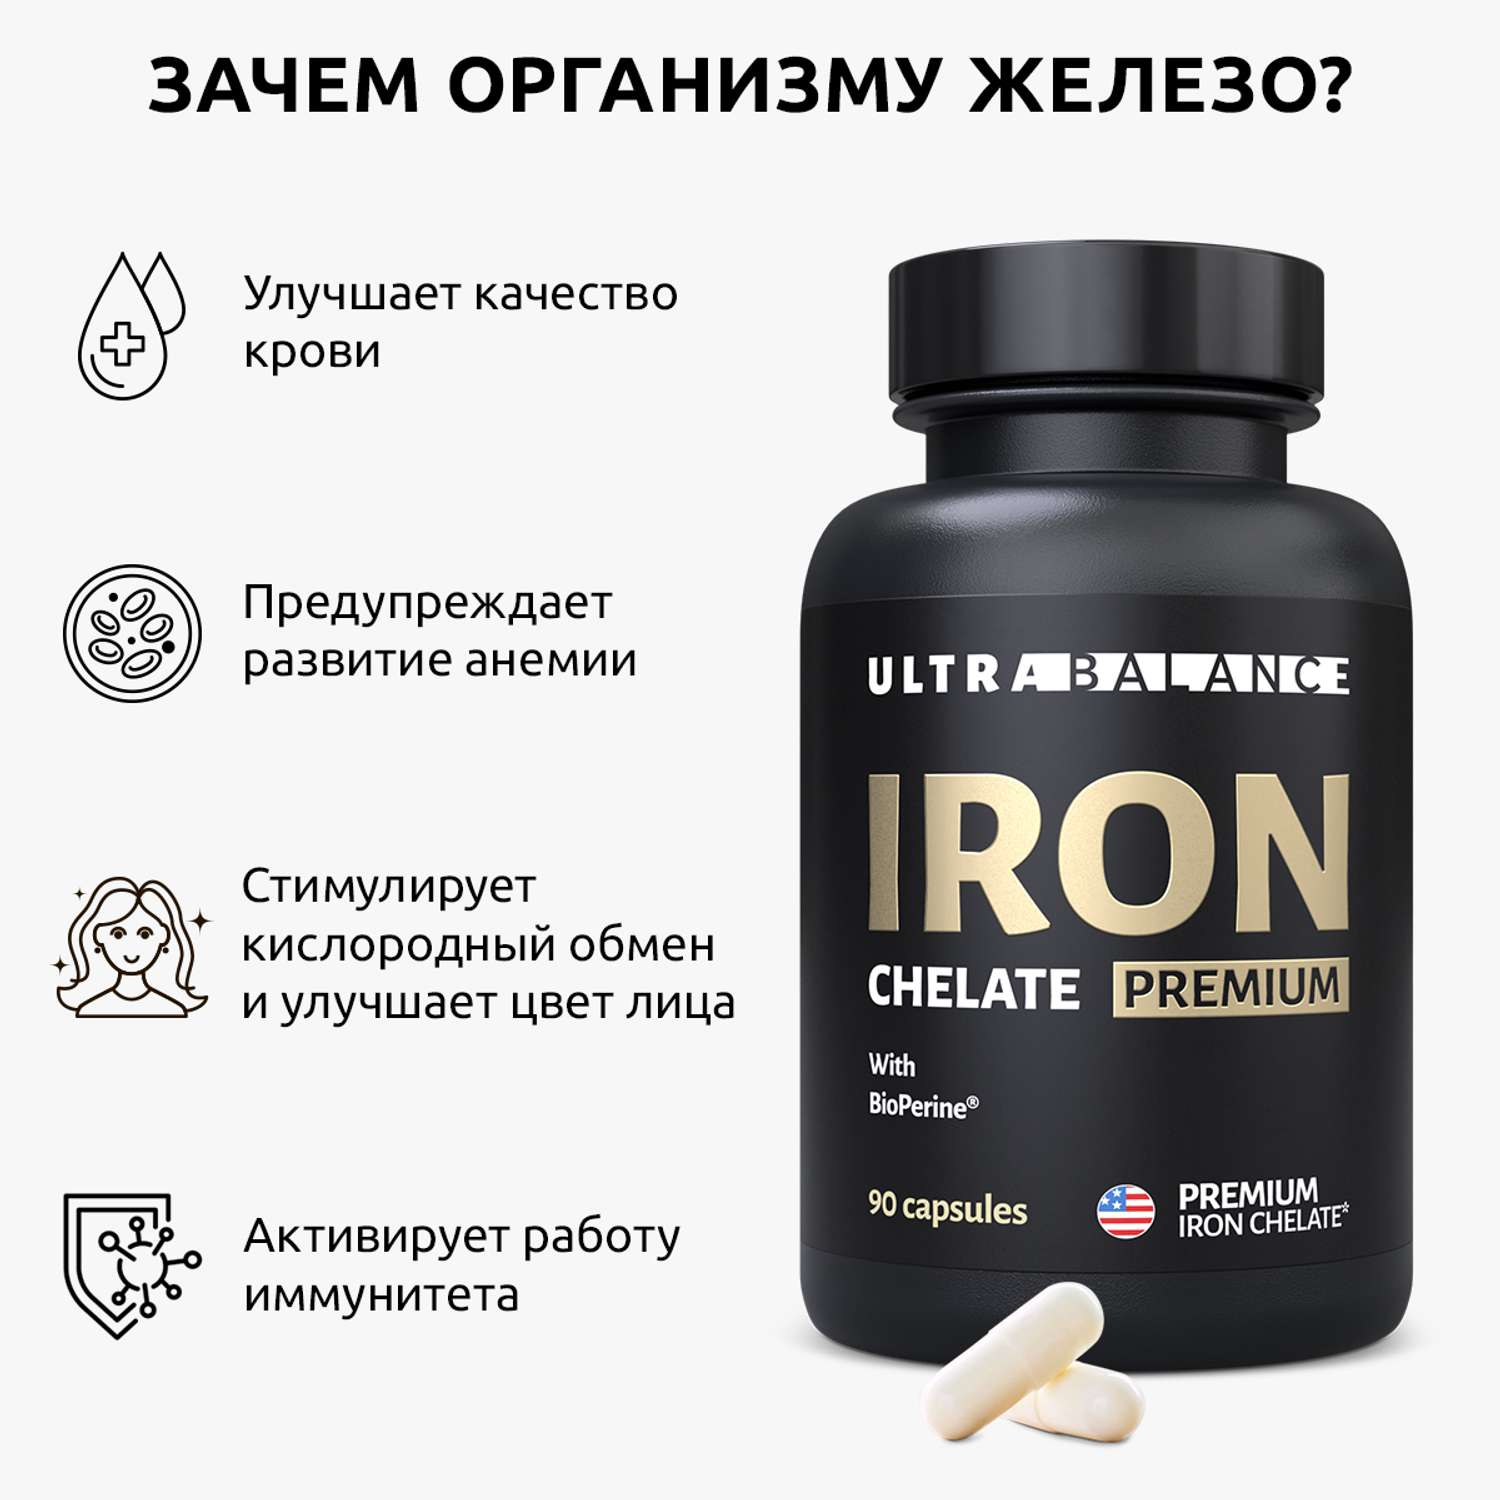 Железо хелатное премиум UltraBalance Iron Chelated Premium with BioPerine витамины хелат с пиперином 90 капсул - фото 2